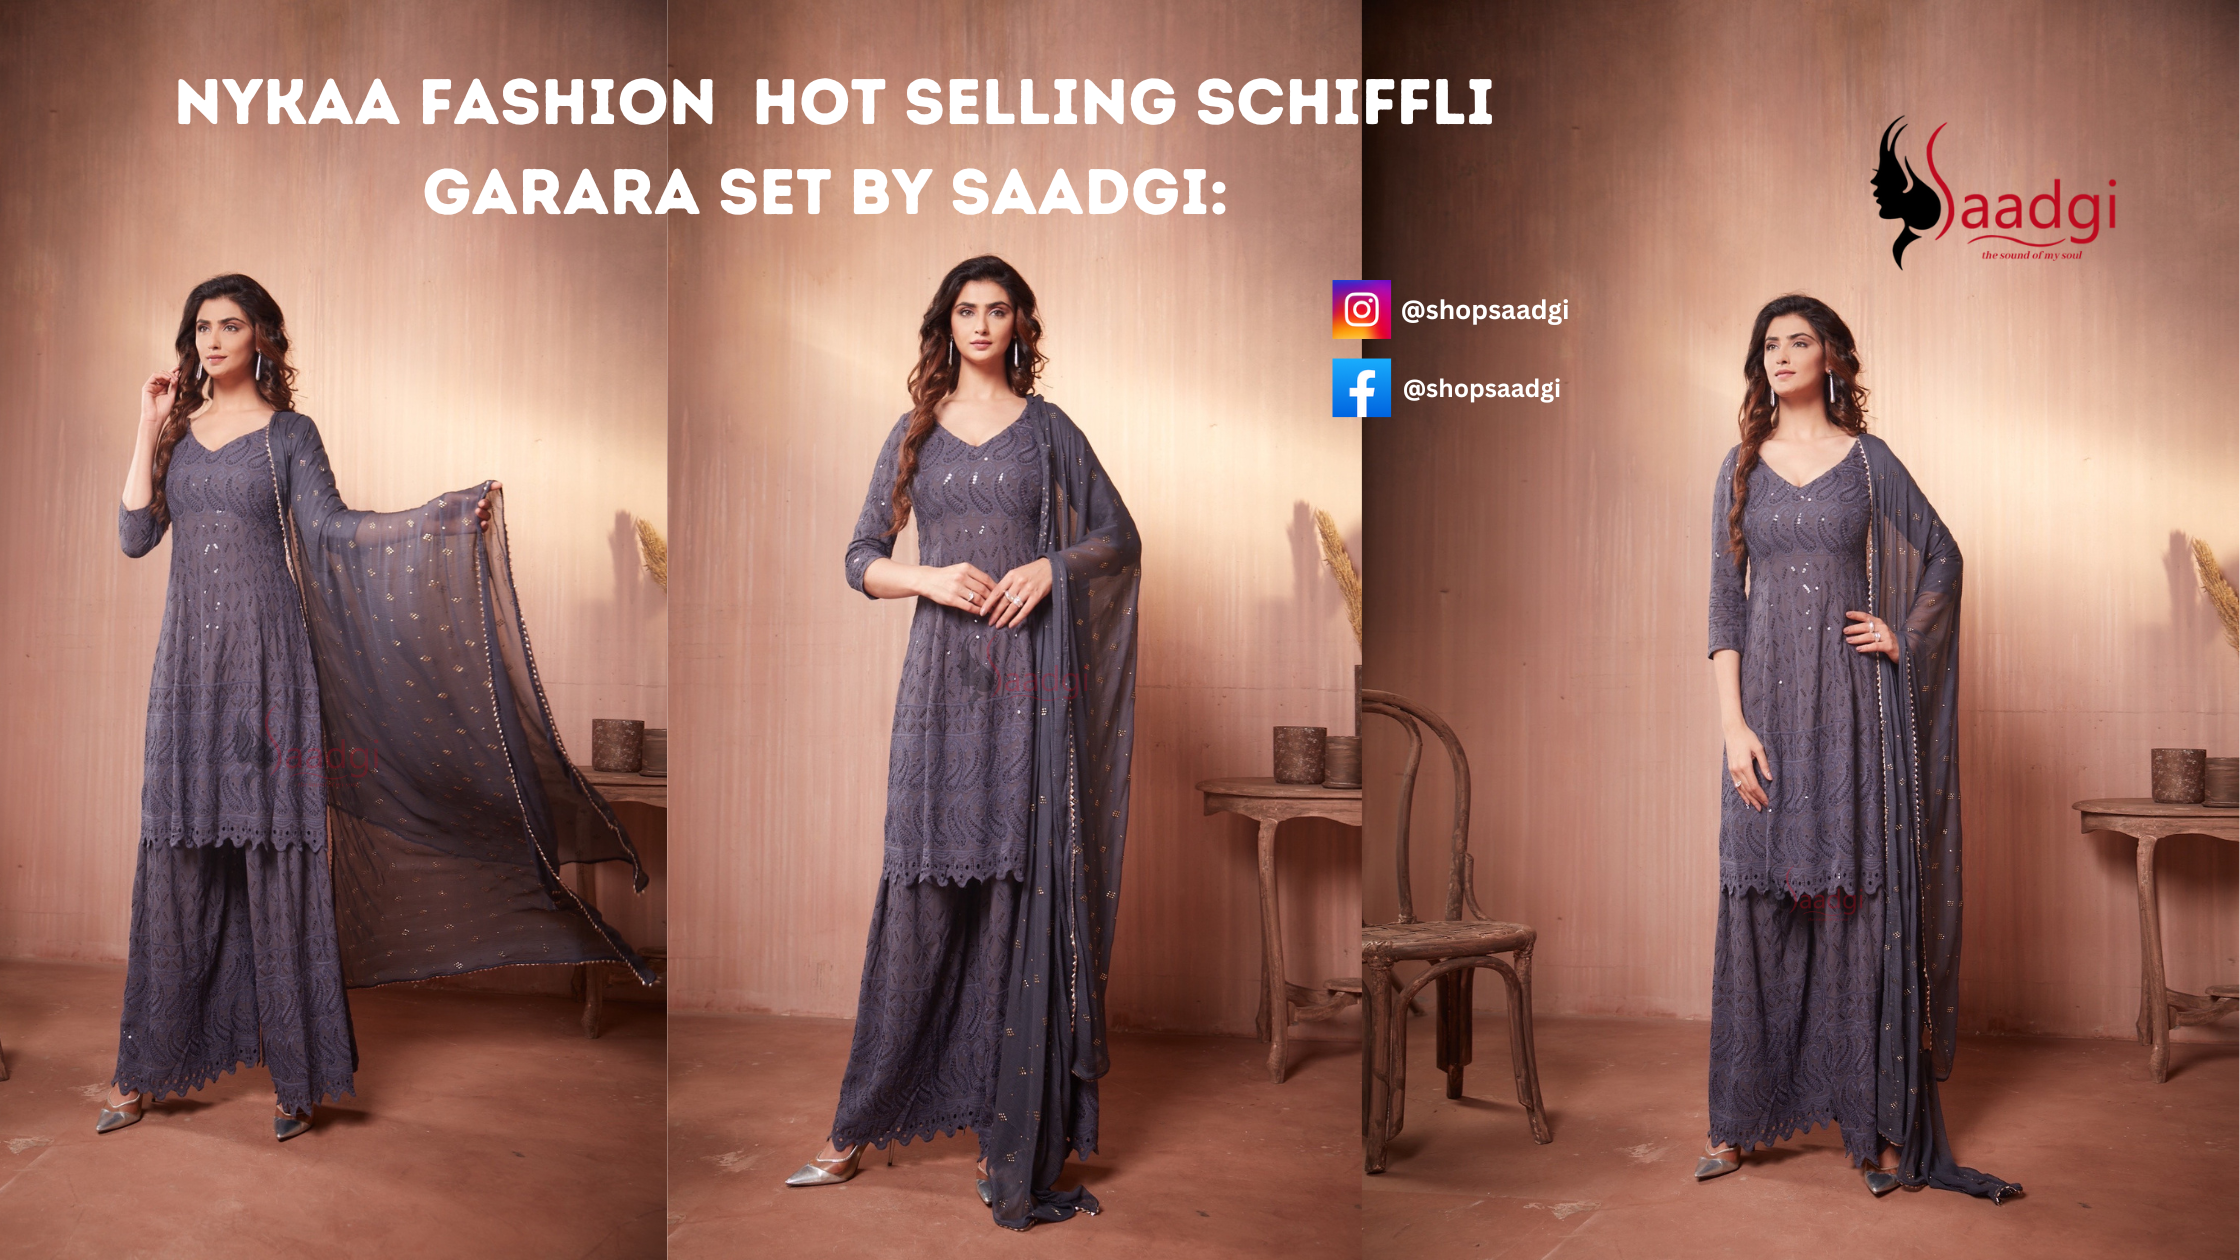 Nykaa fashion Hot Selling Schiffli garara set by Saadgi: